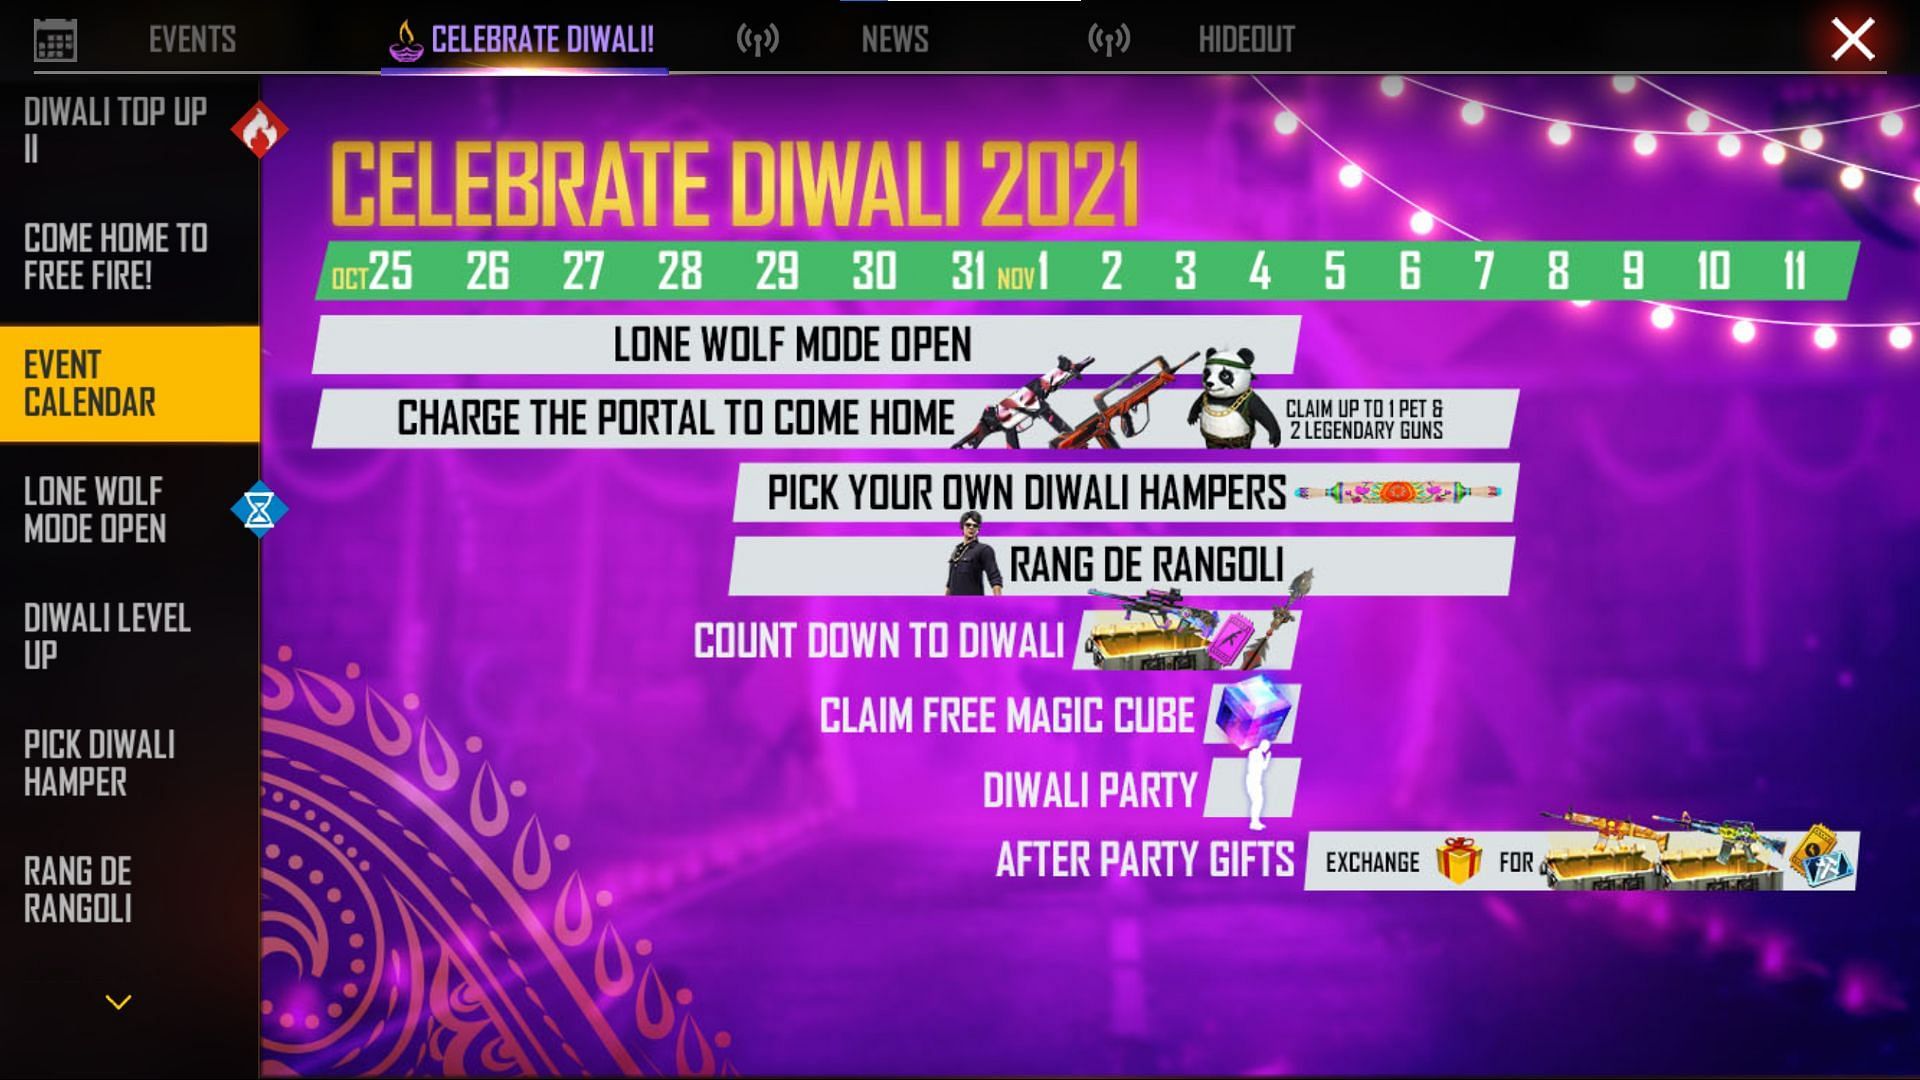 The Free Fire Diwali celebration calendar (Image via Free Fire)